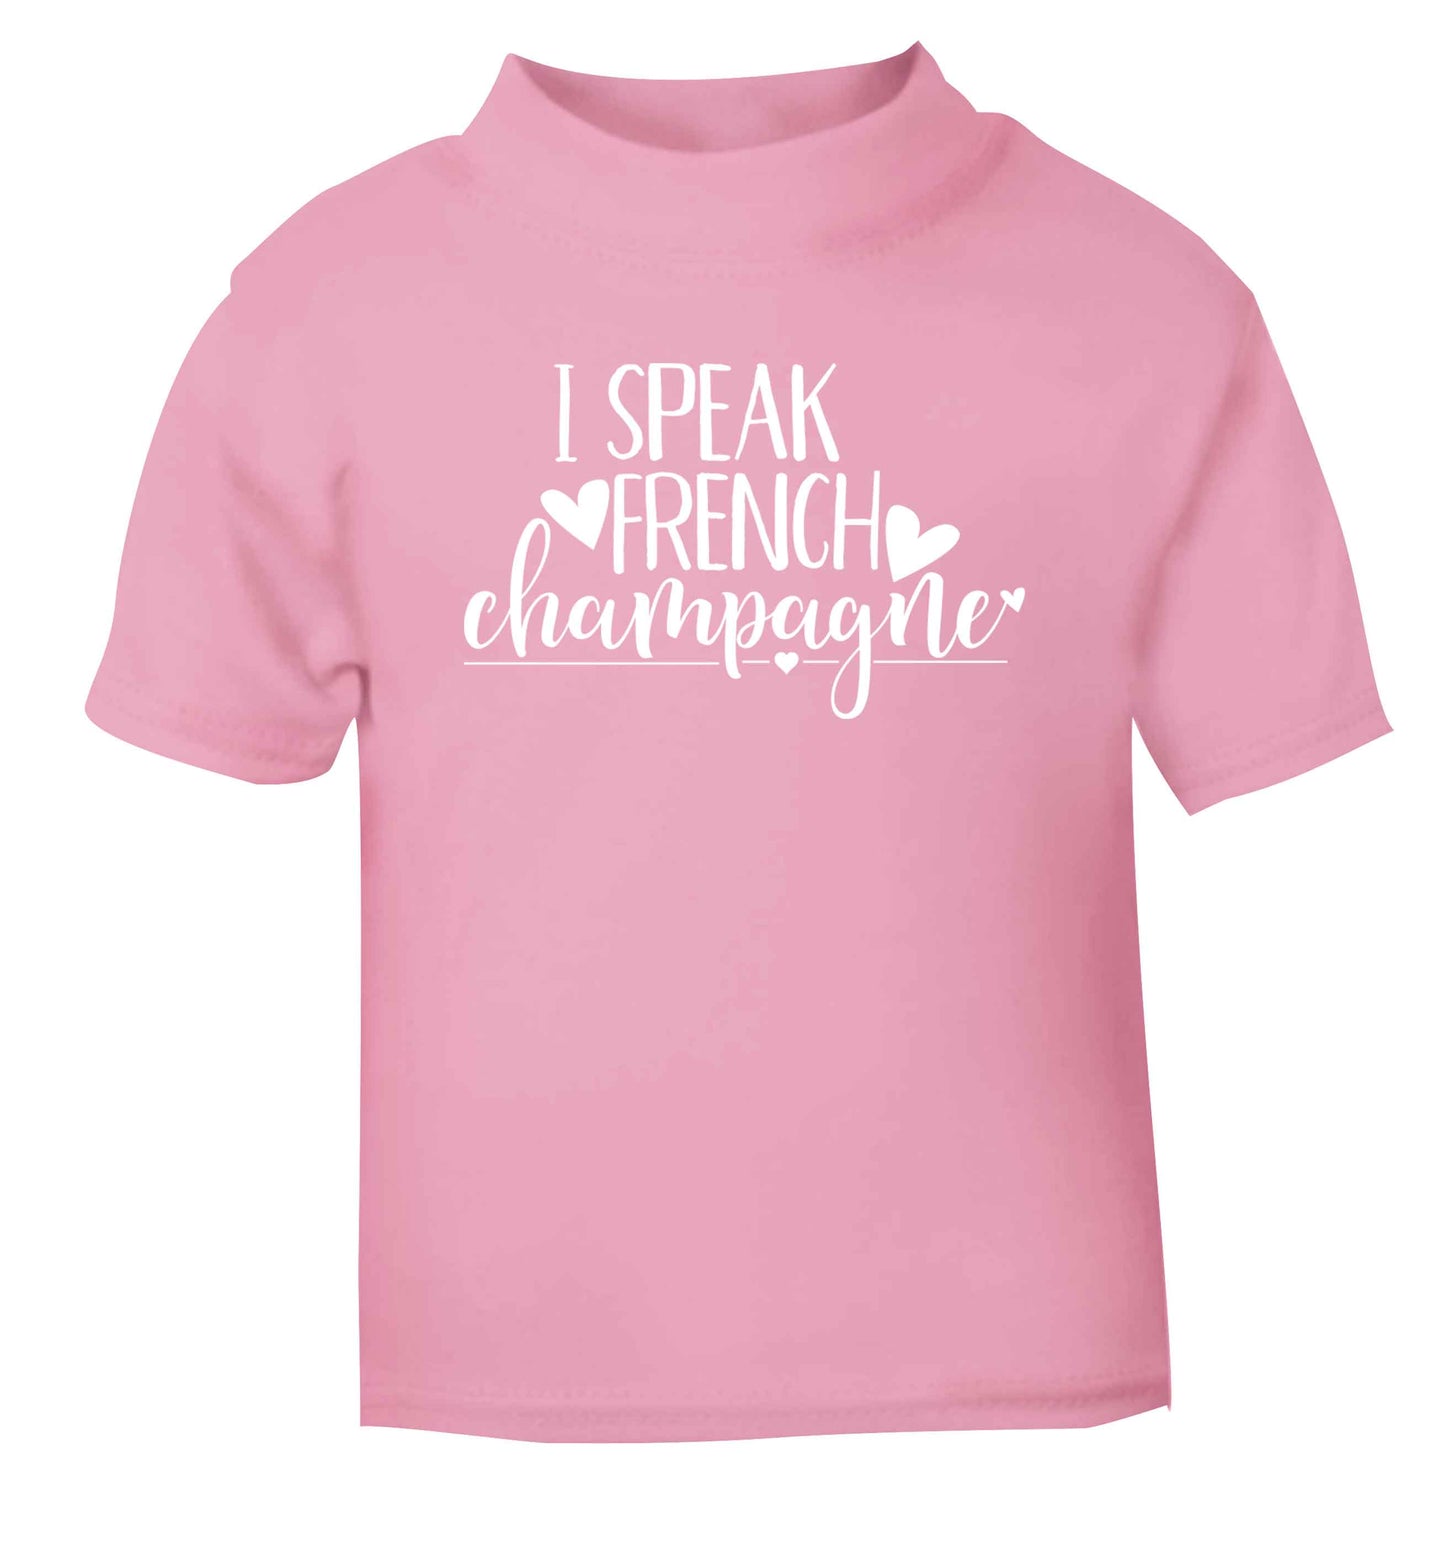 I speak french champagne light pink Baby Toddler Tshirt 2 Years